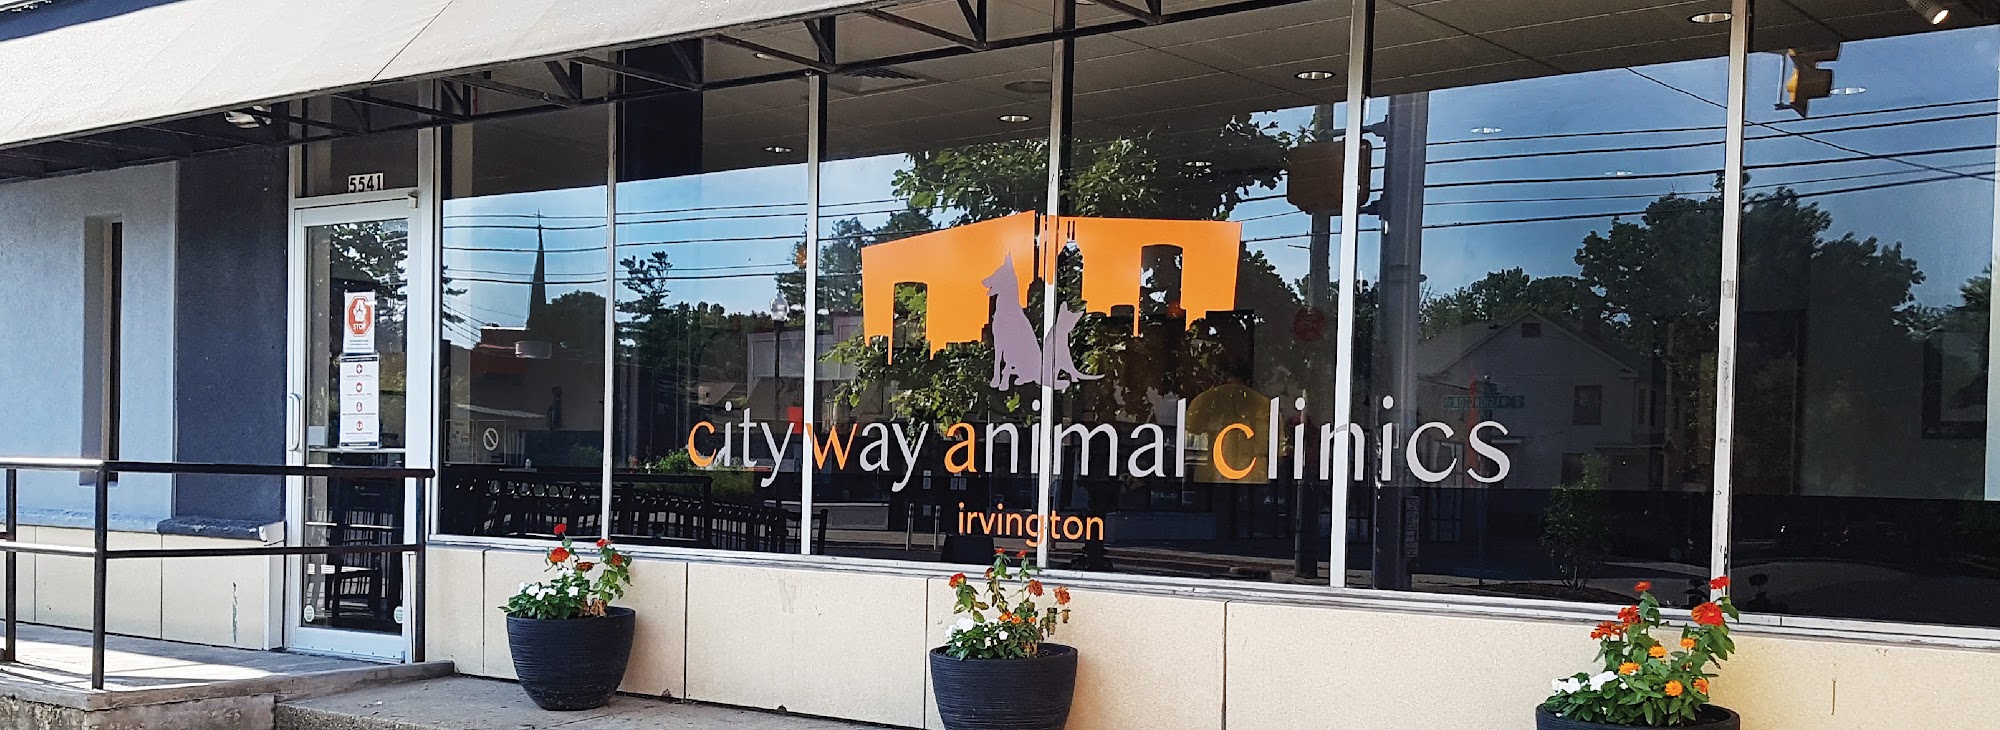 City Way Animal Clinics - Irvington